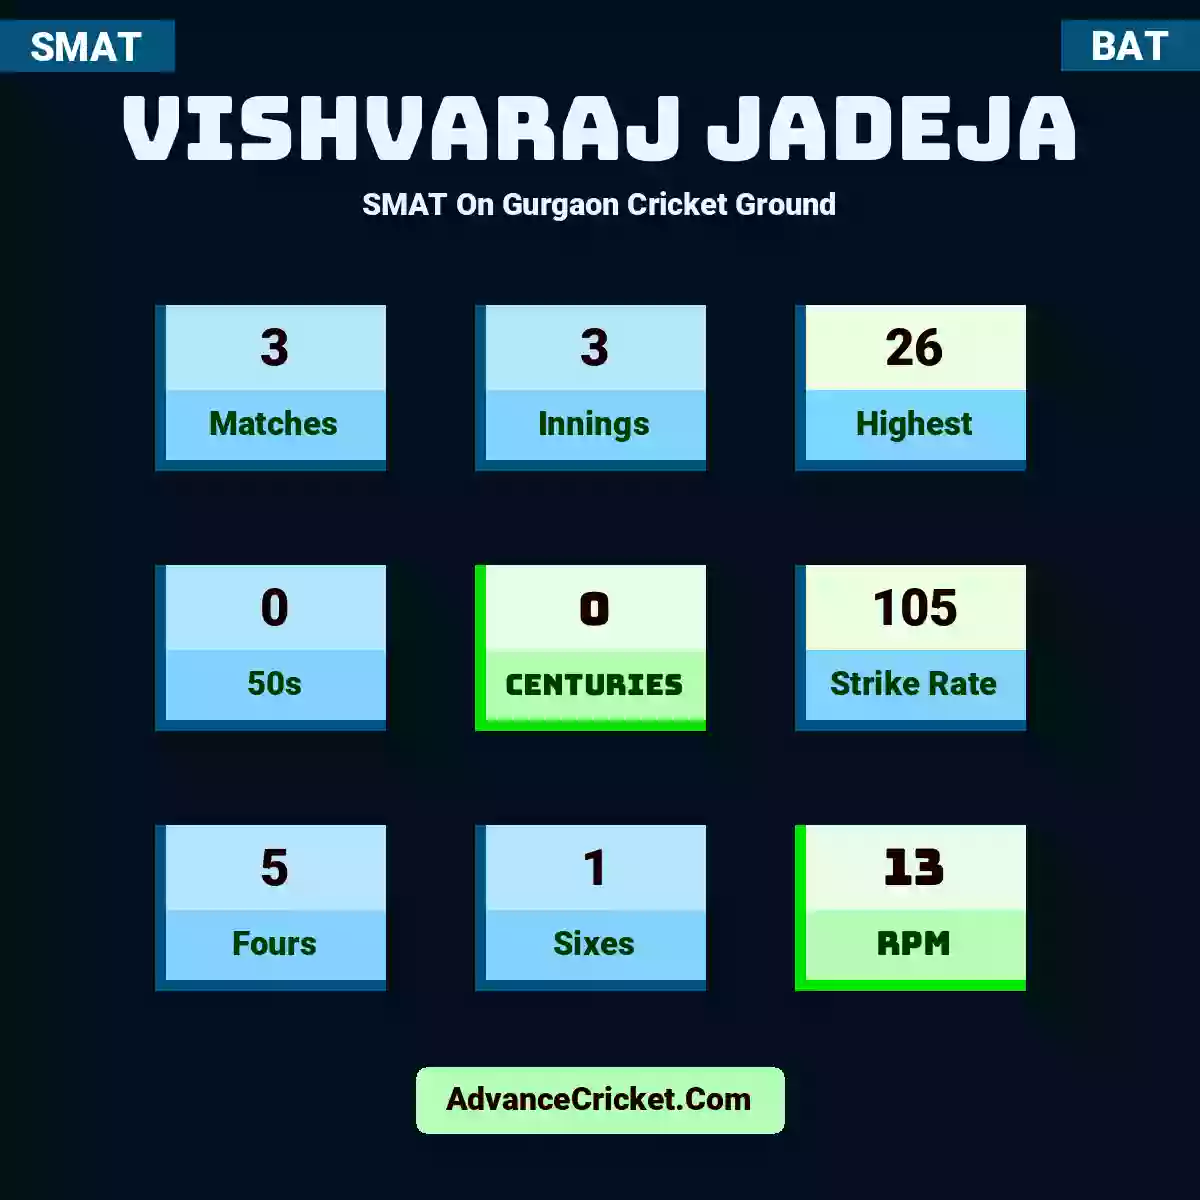 Vishvaraj Jadeja SMAT  On Gurgaon Cricket Ground, Vishvaraj Jadeja played 3 matches, scored 26 runs as highest, 0 half-centuries, and 0 centuries, with a strike rate of 105. V.Jadeja hit 5 fours and 1 sixes, with an RPM of 13.